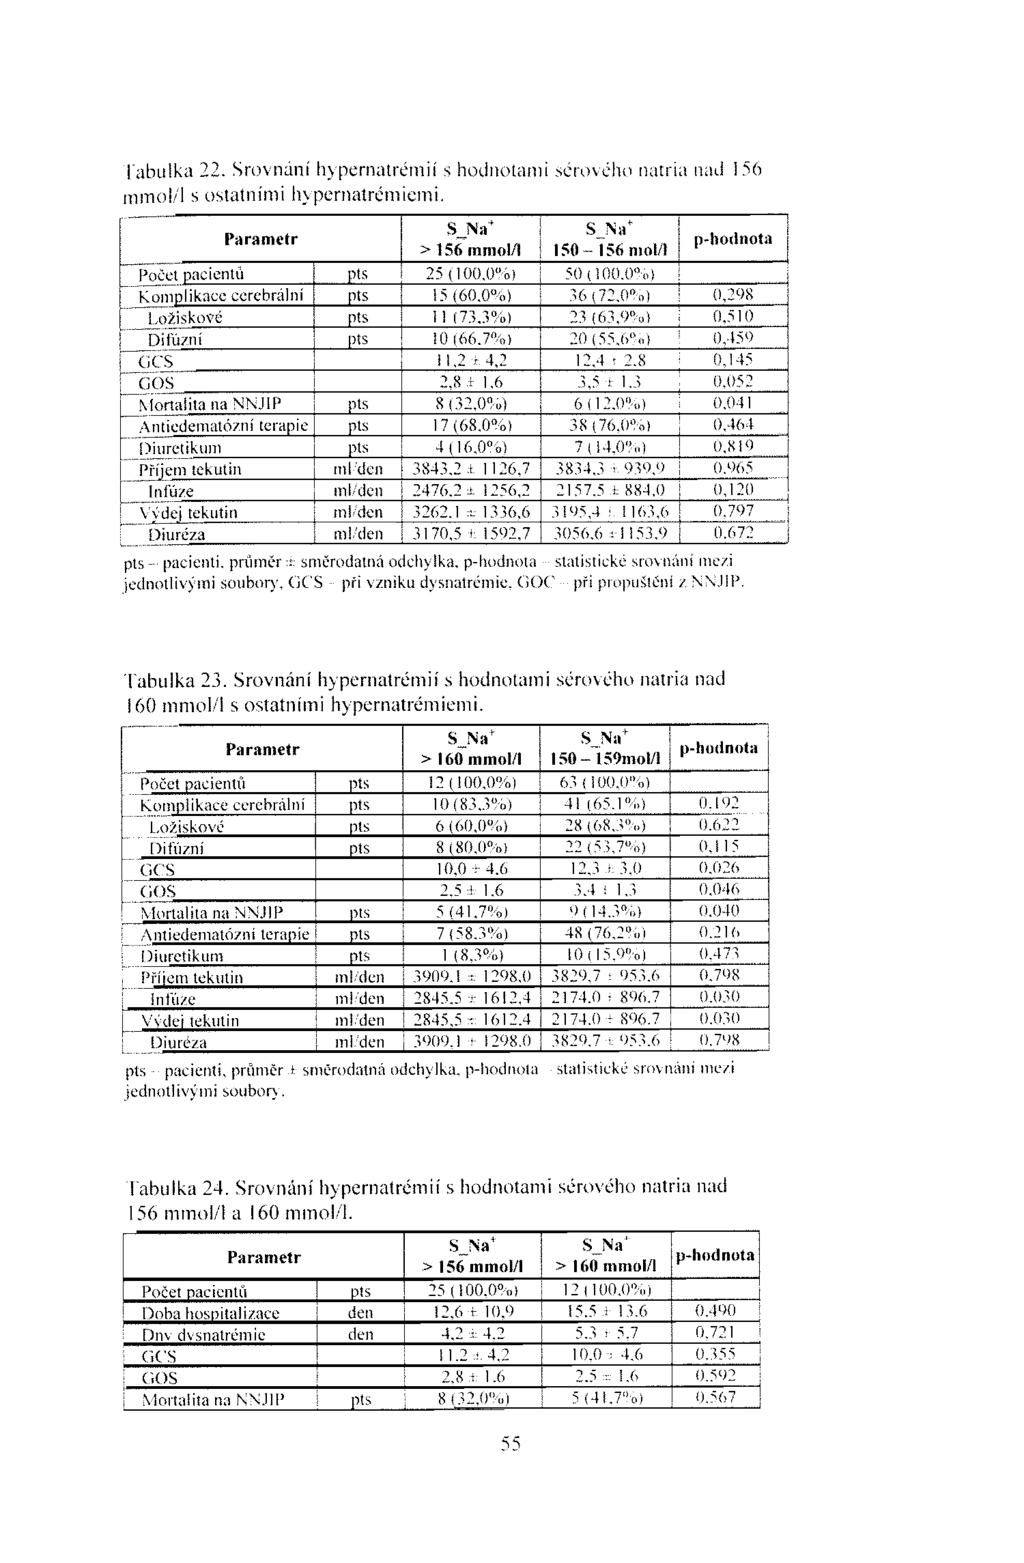 Tabulka 22. Srovnání hypernatrémií s hodnotami sérového natria nad 156 mmol/1 s ostatními hypernatrémiemi.